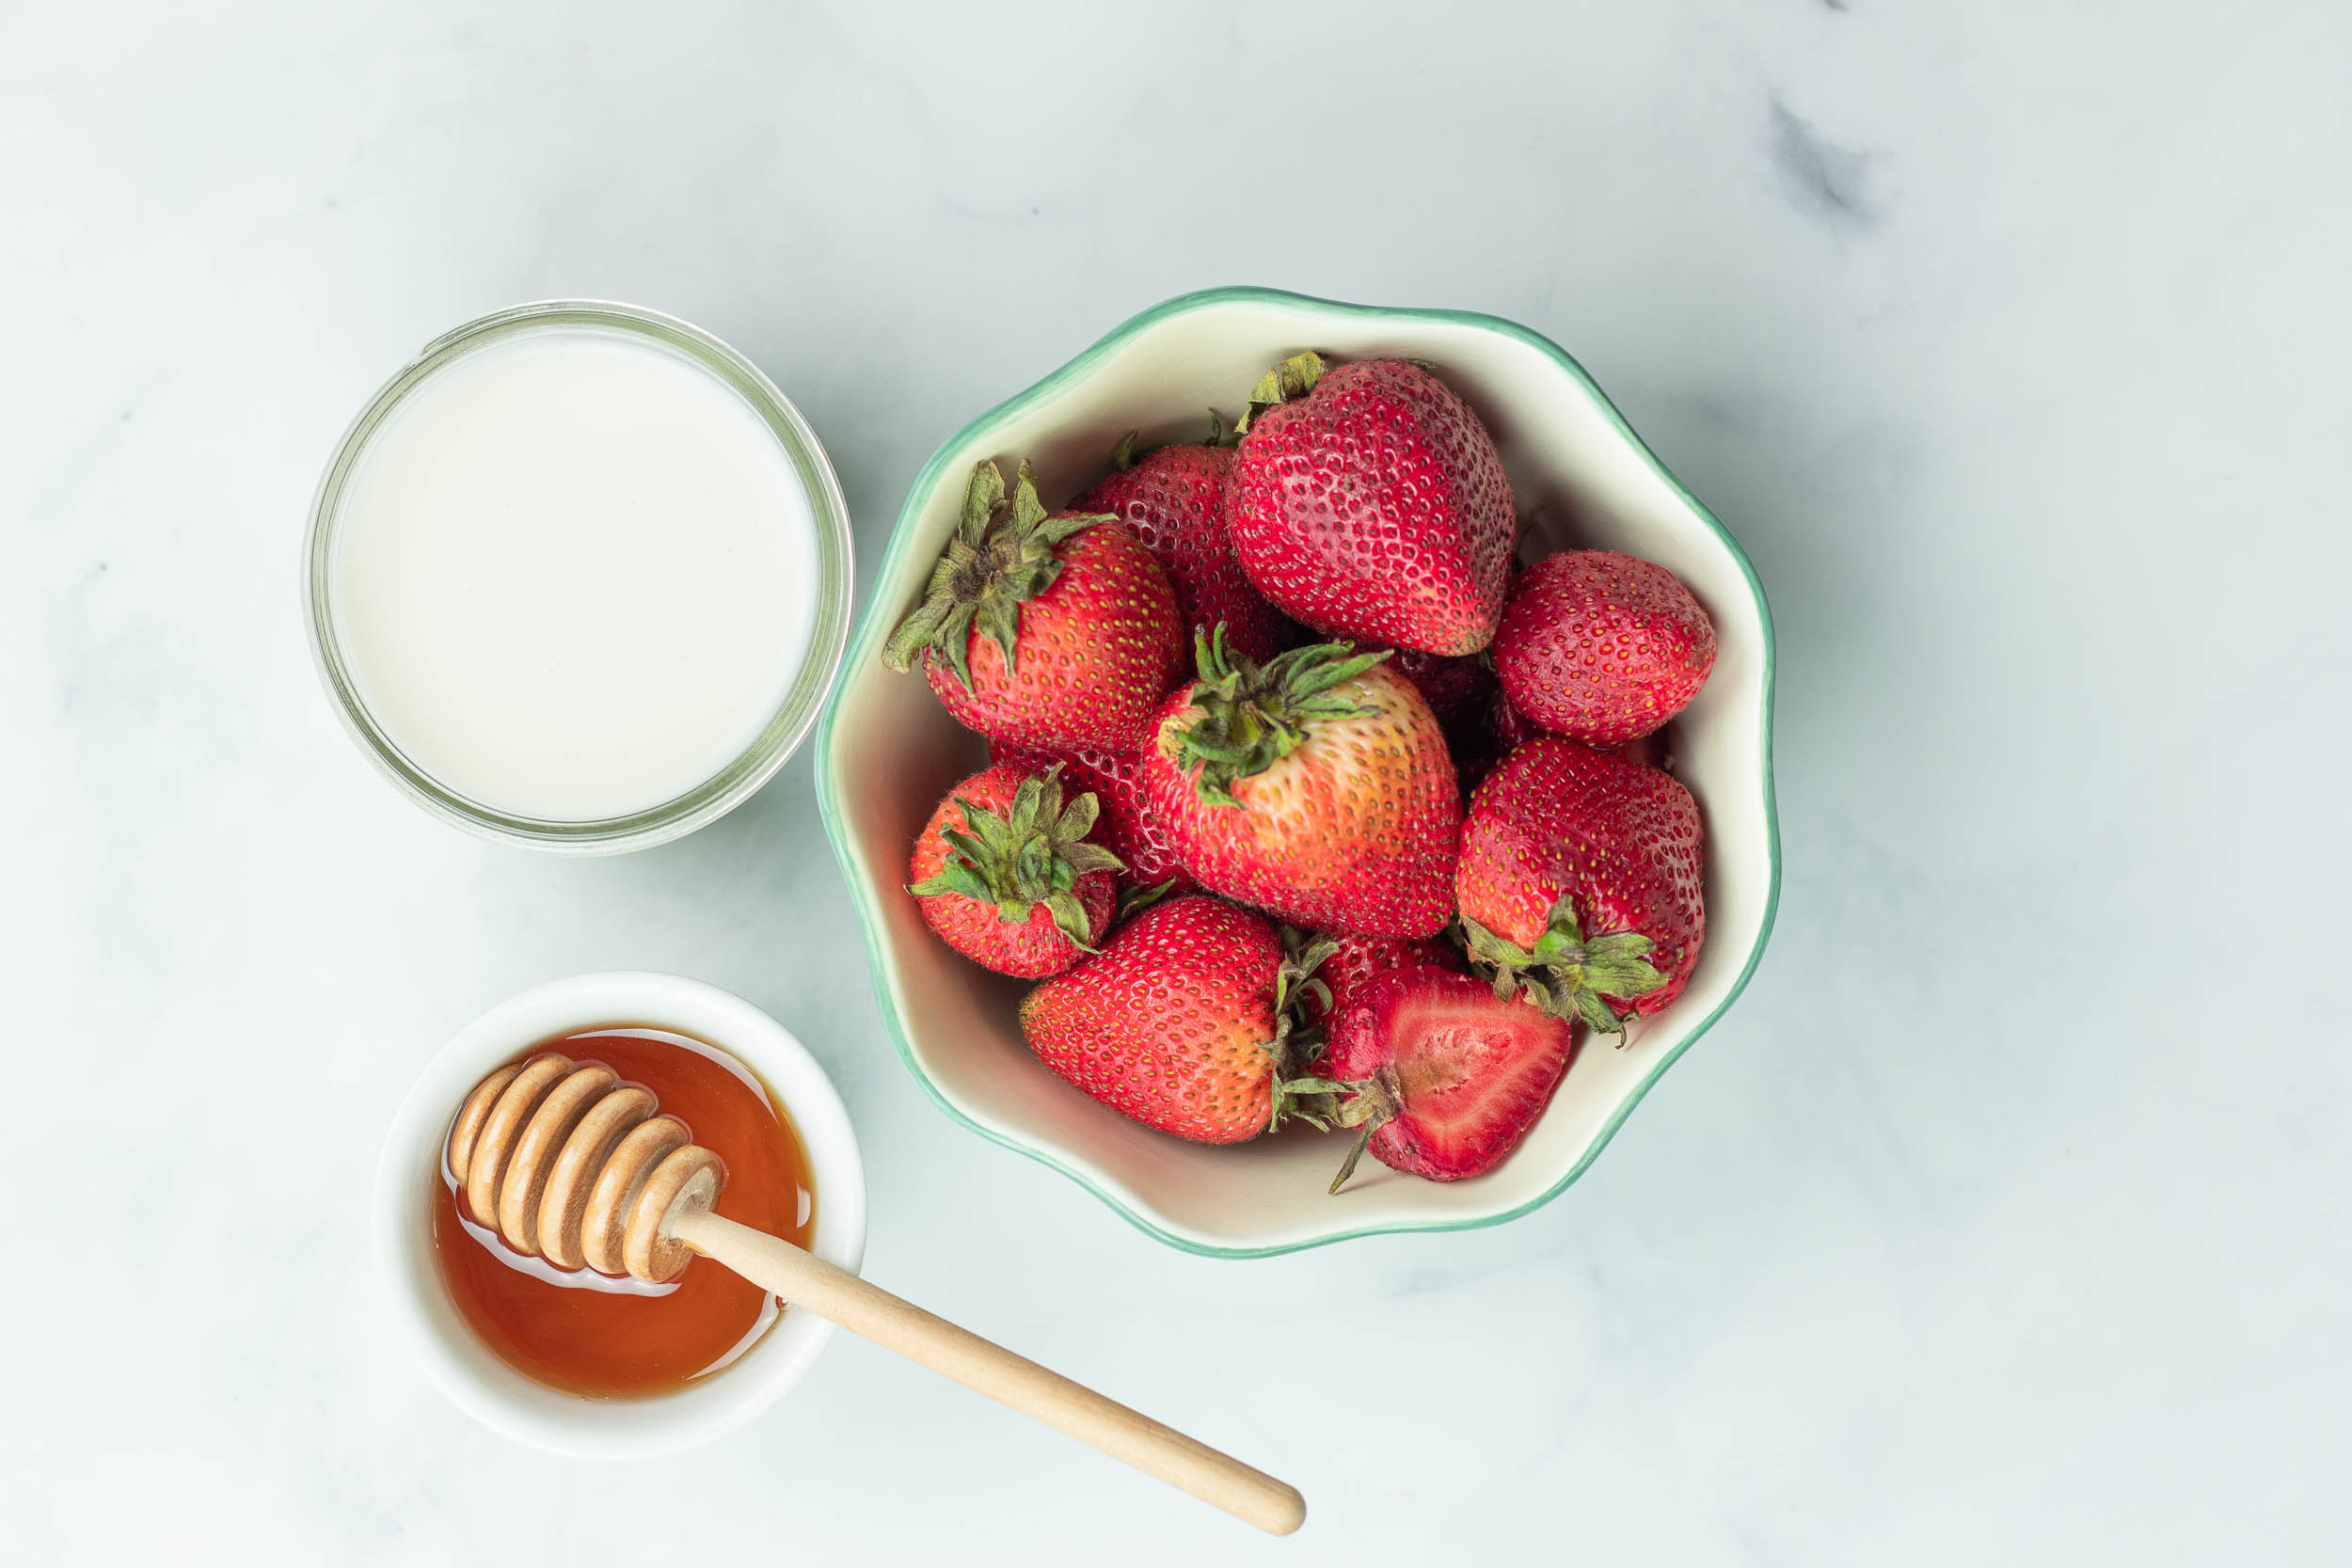 Ingredients for strawberry smoothie. Strawberries, honey, plant-based milk